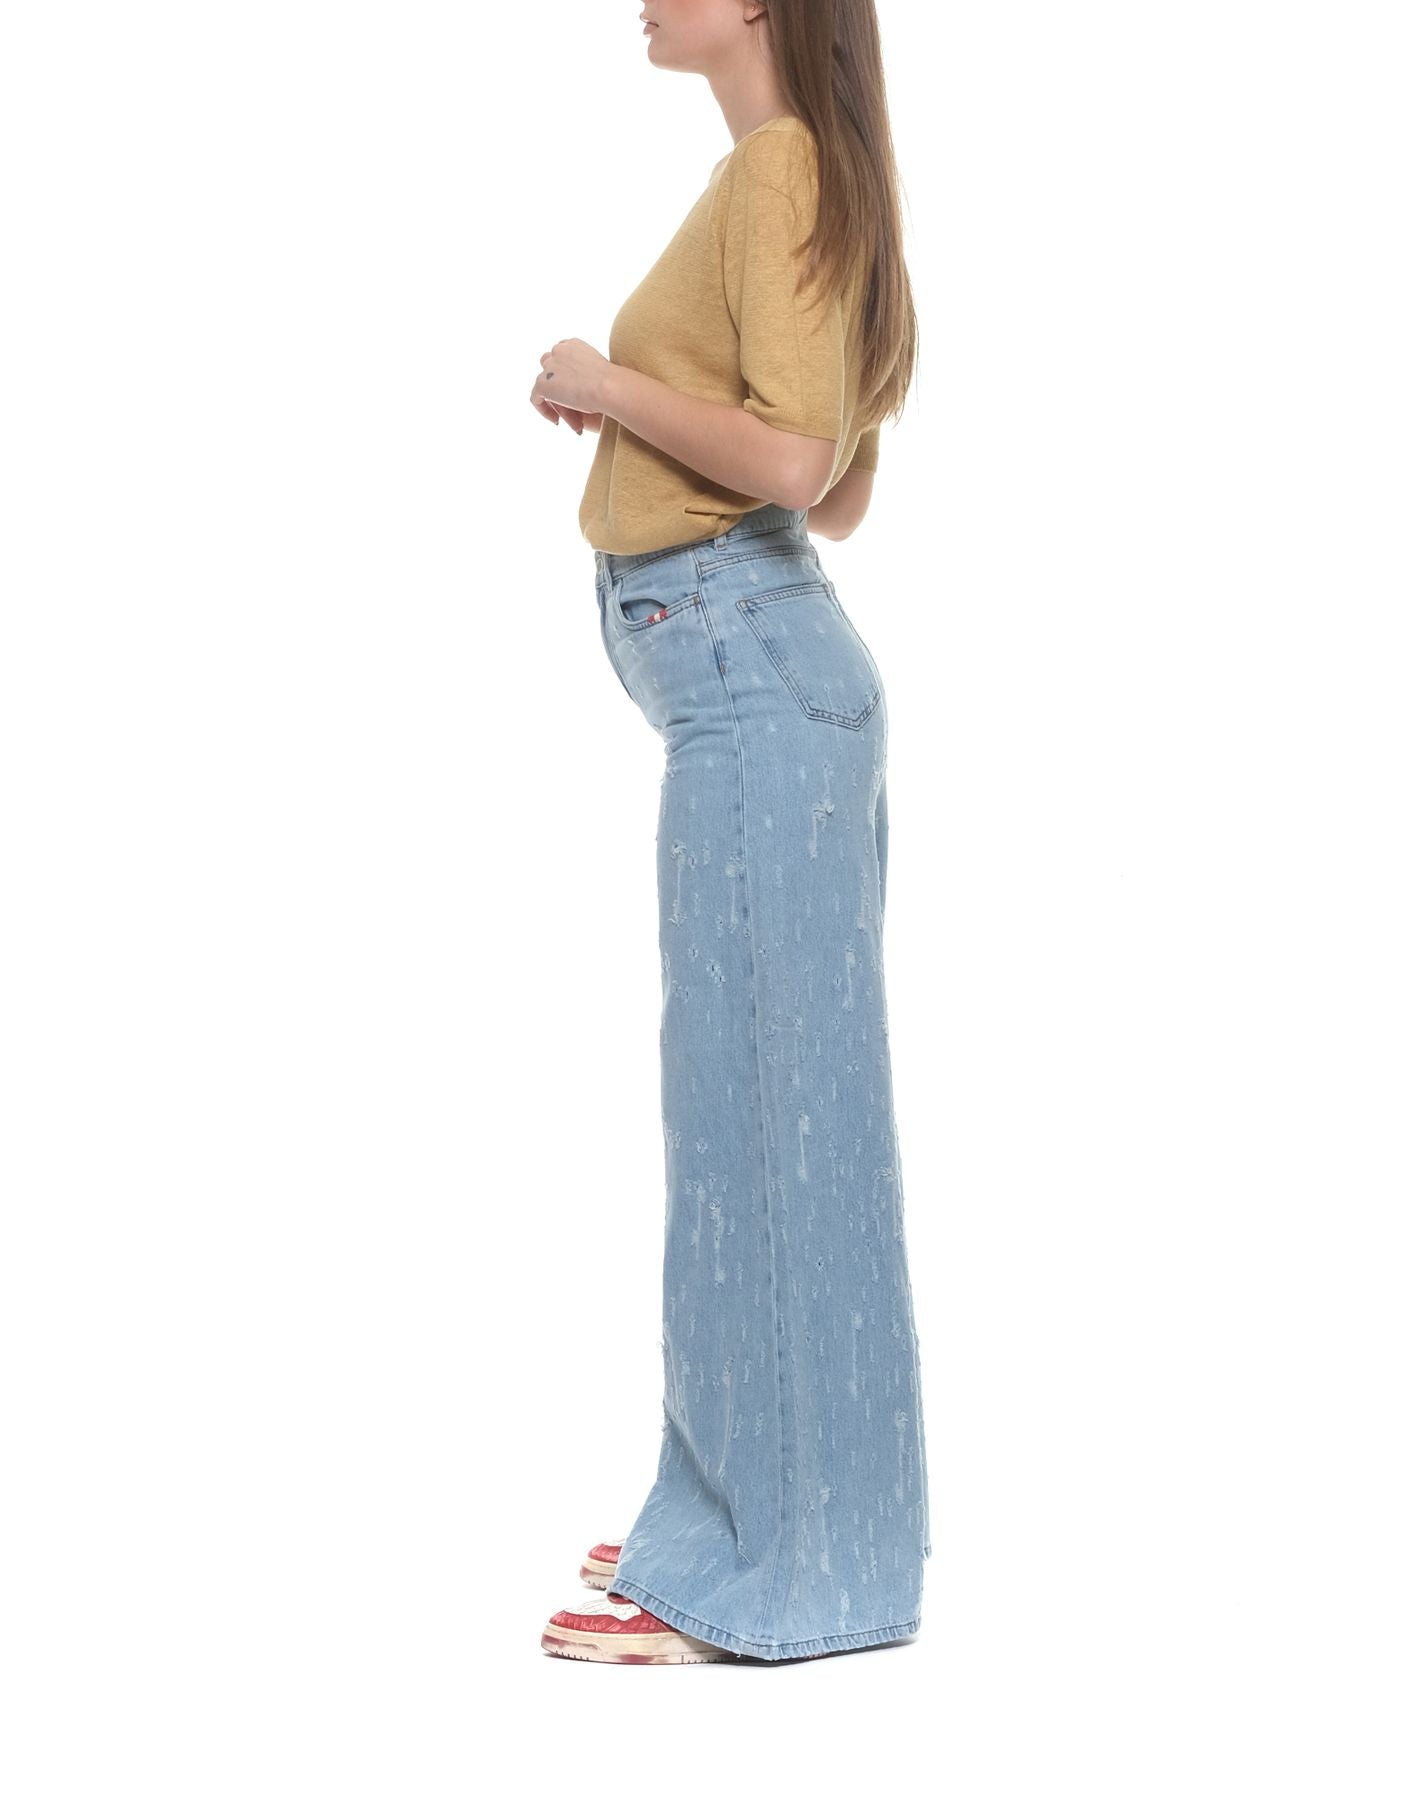 Jeans woman AMD002D3802021 TURN APART Amish